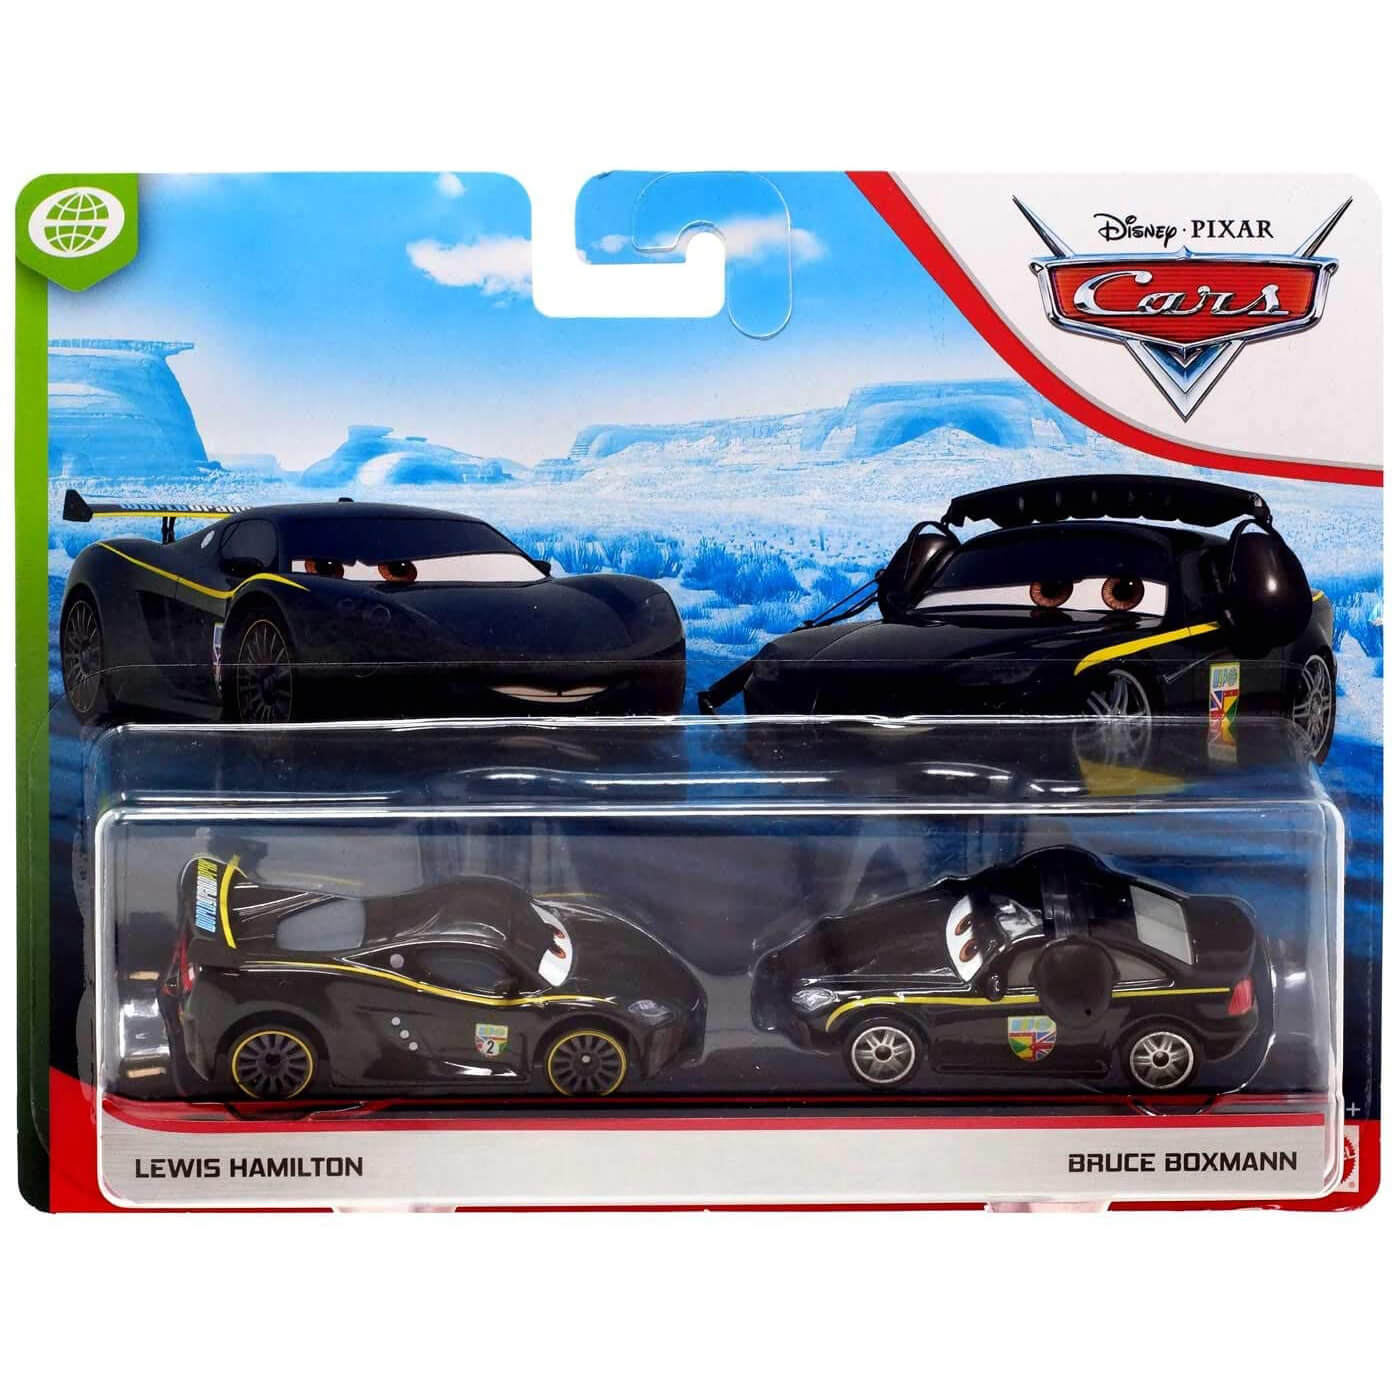 Disney Pixar Cars Lewis Hamilton and Bruce Boxmann 1:55 Scale Diecast Vehicle 2-Pack